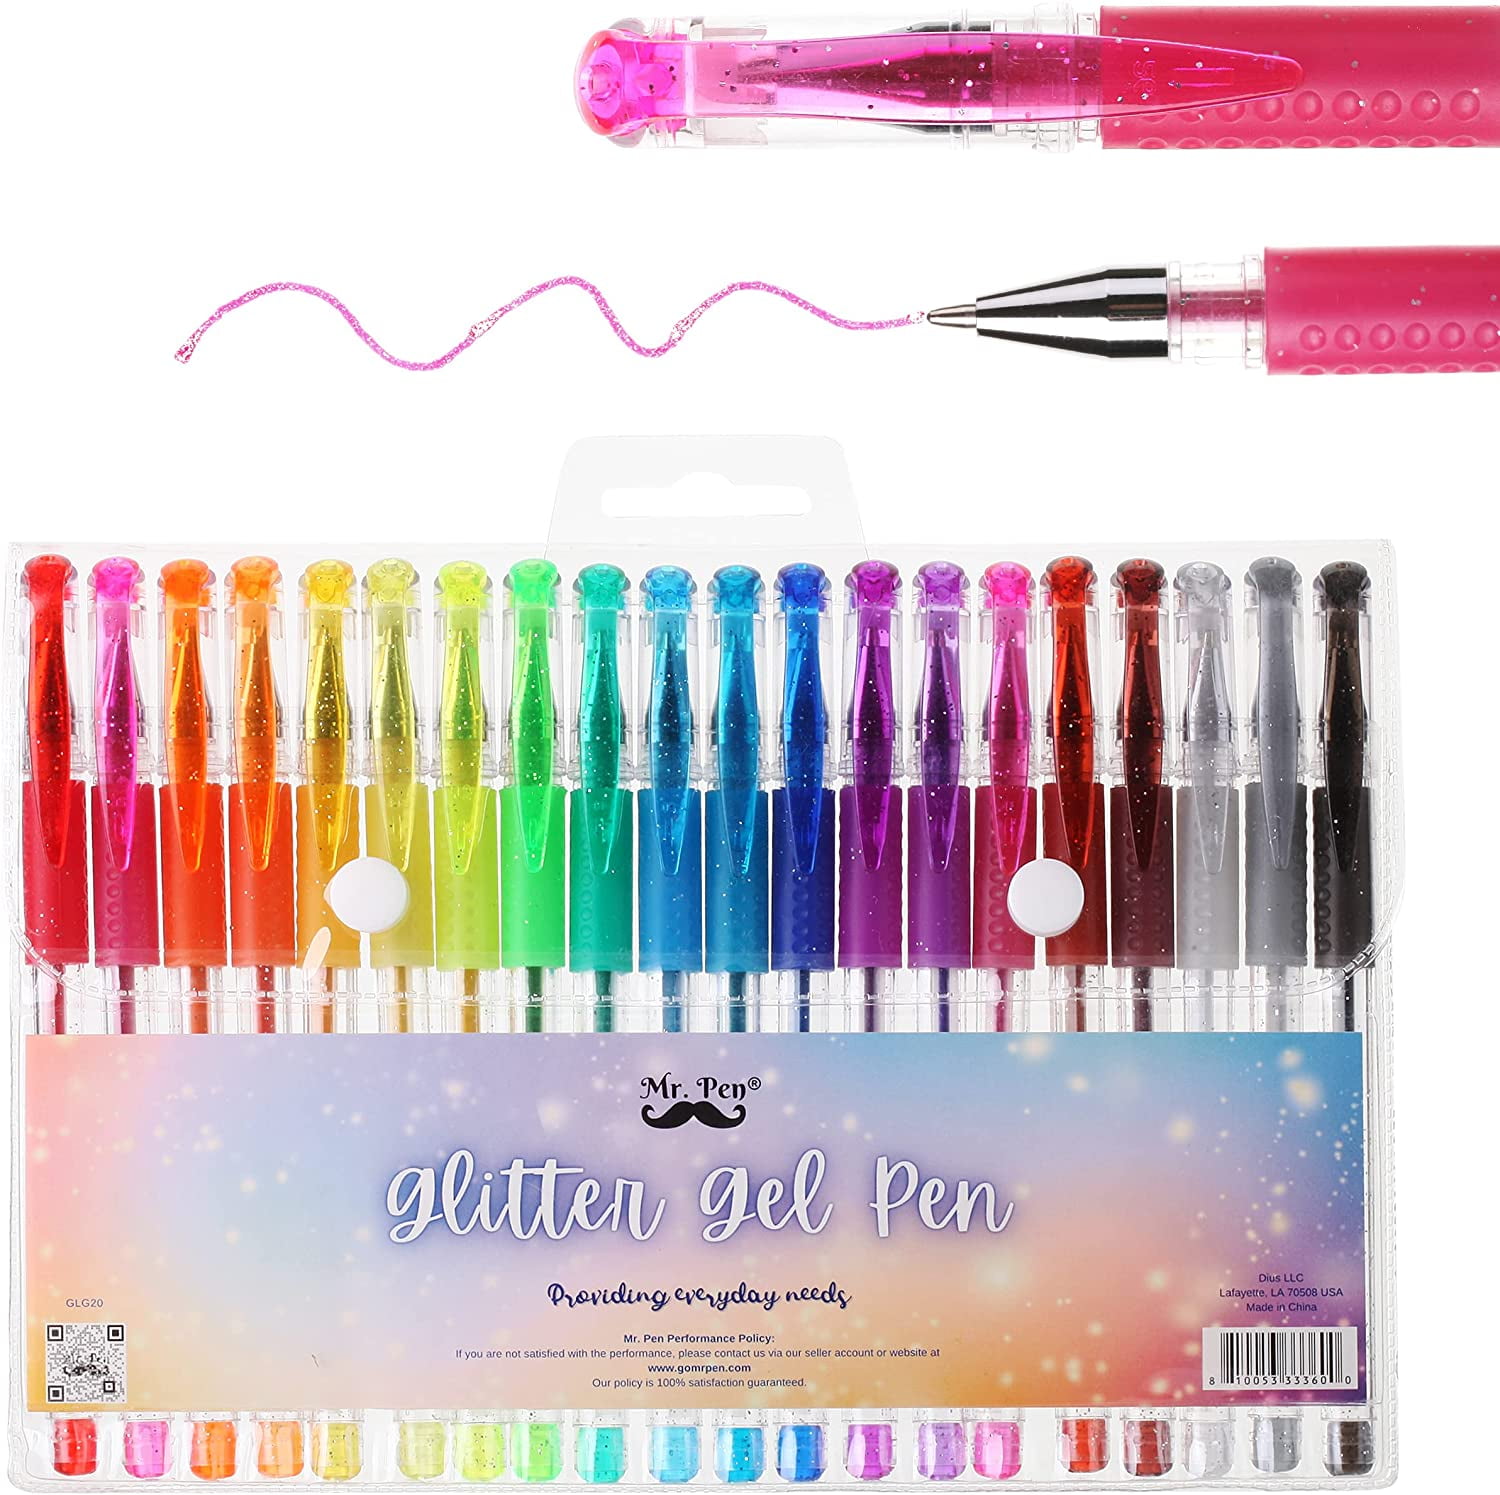 24-48 Color Gel Pens Refill Coloring Art Drawing Glitter Neon pen Refill Set 